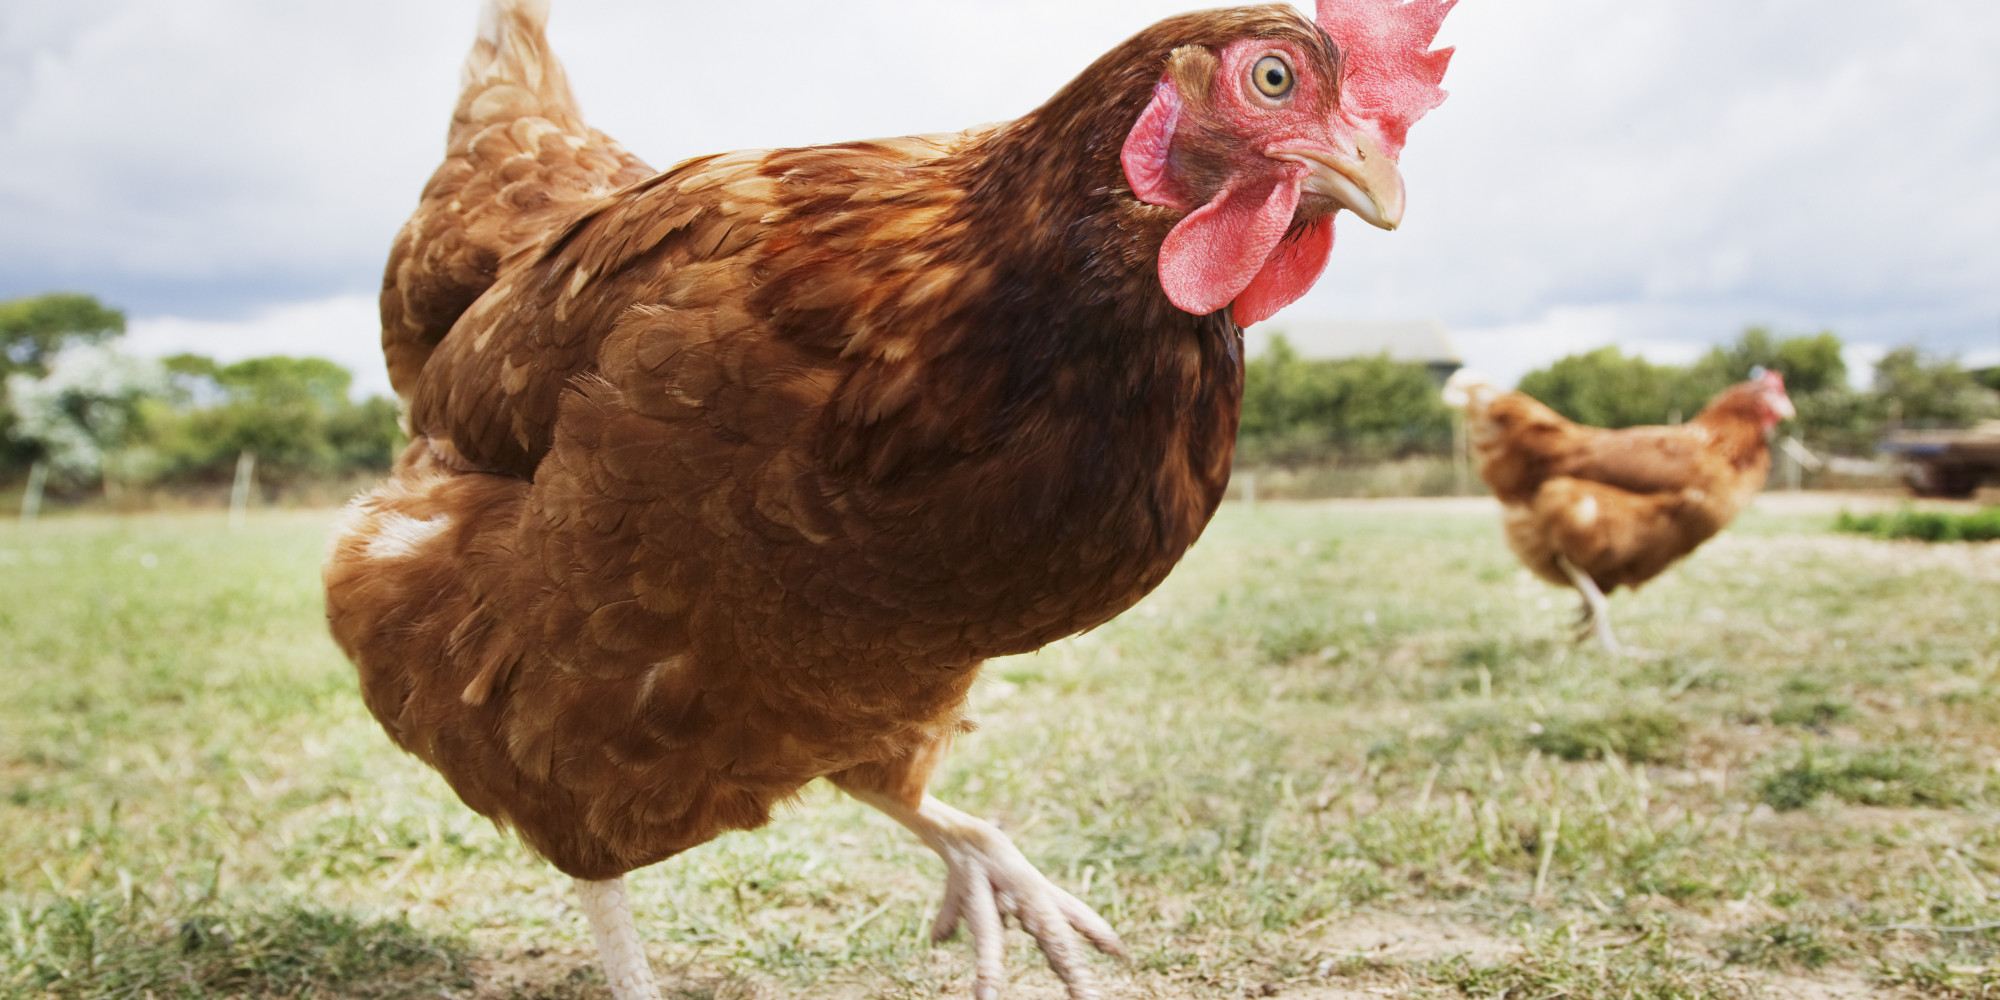 Ed Miliband Finally Calls David Cameron 'Chicken' Over Debates - HuffPost UK